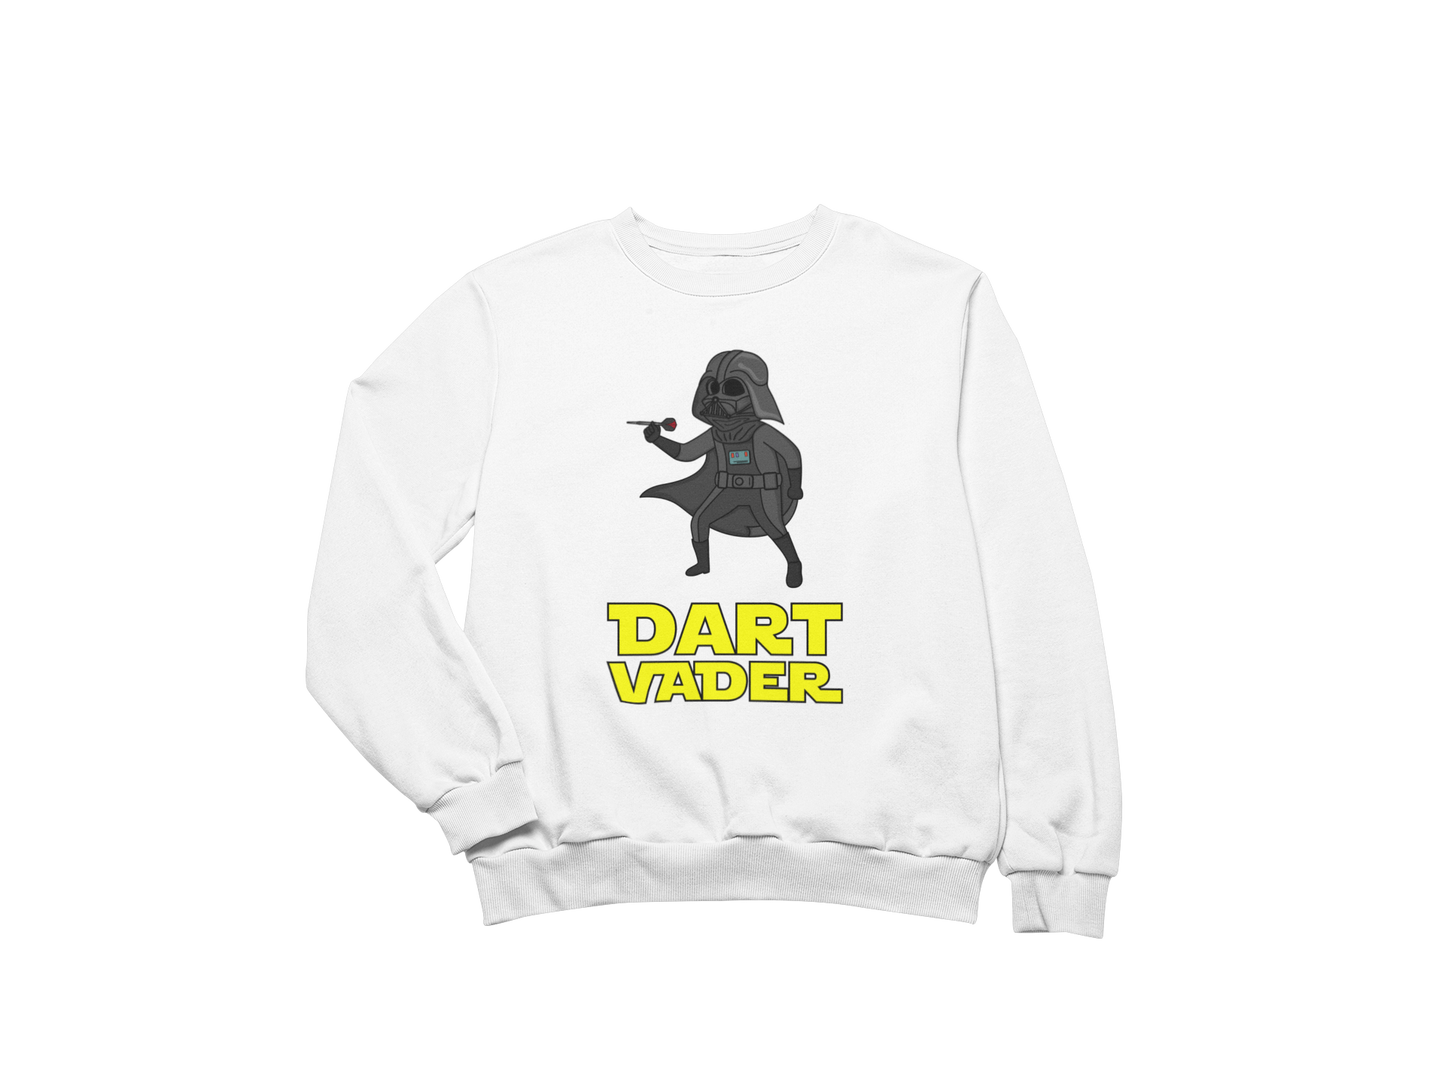 Vader - Sweatshirt